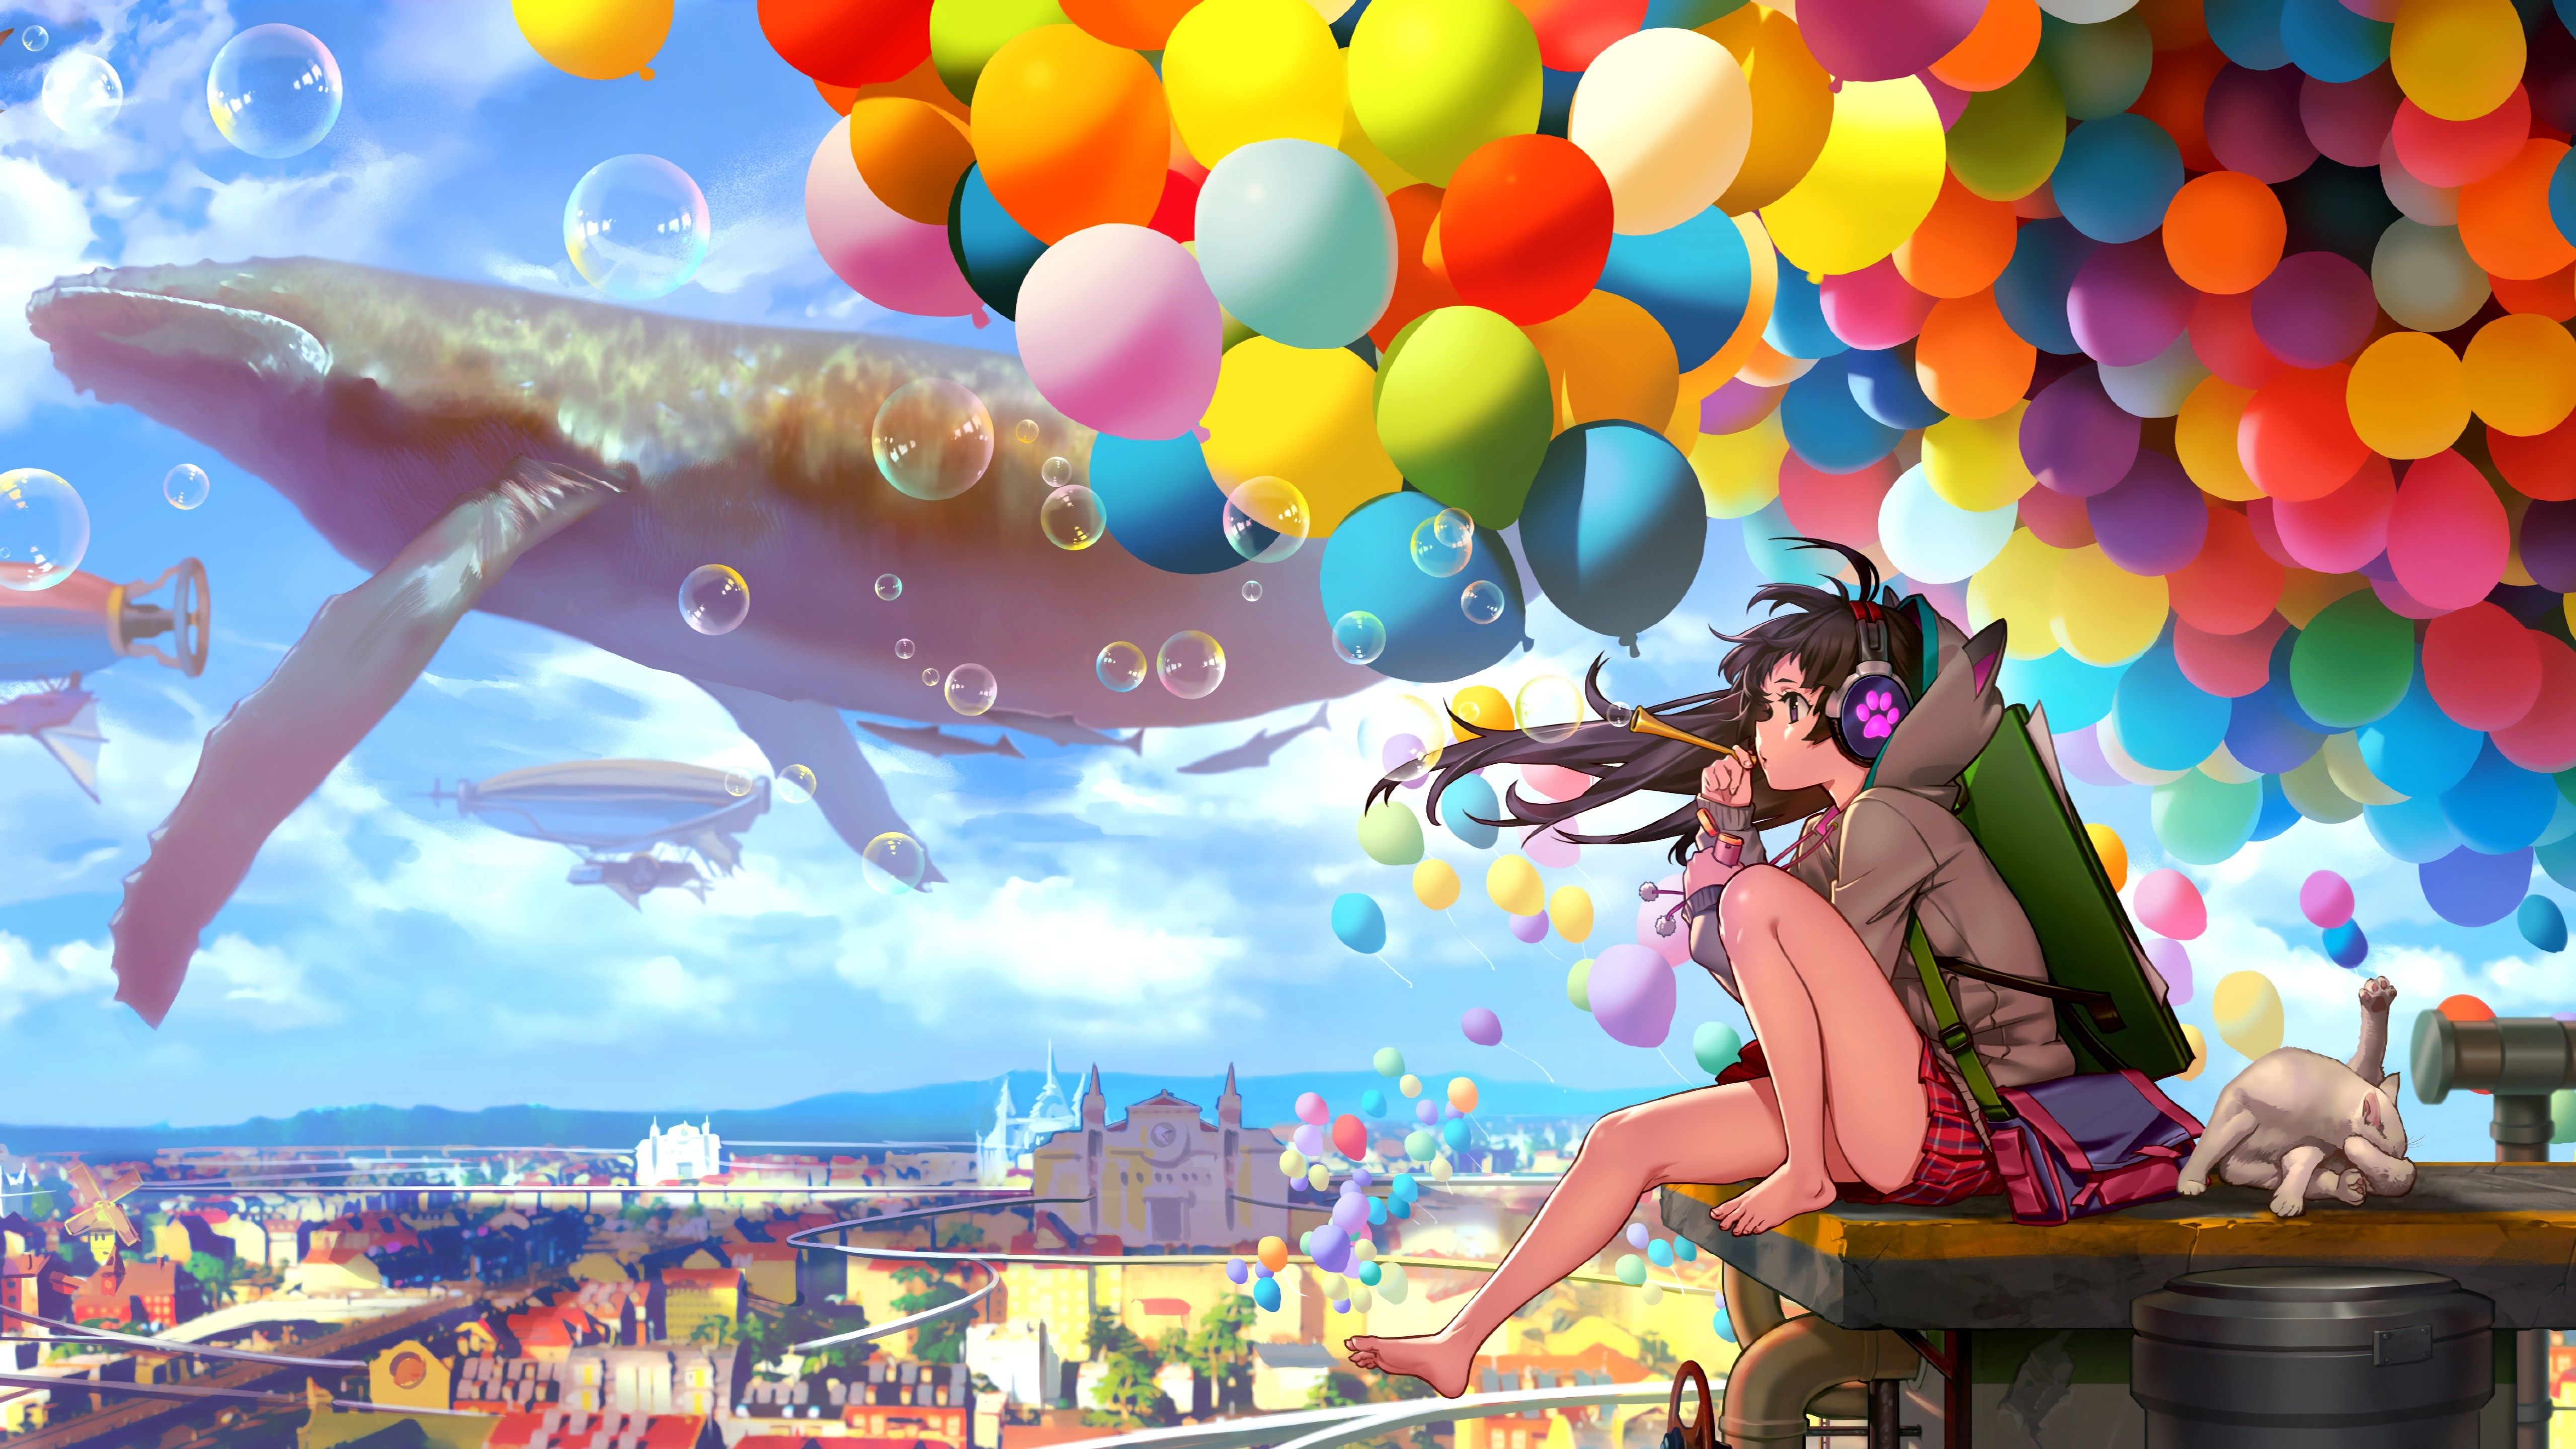 Anime Anime Girls Balloon Bubbles Sky Clouds Whale Animals Cats Feet Cityscape Headphones Hot Air Ba 5120x2880